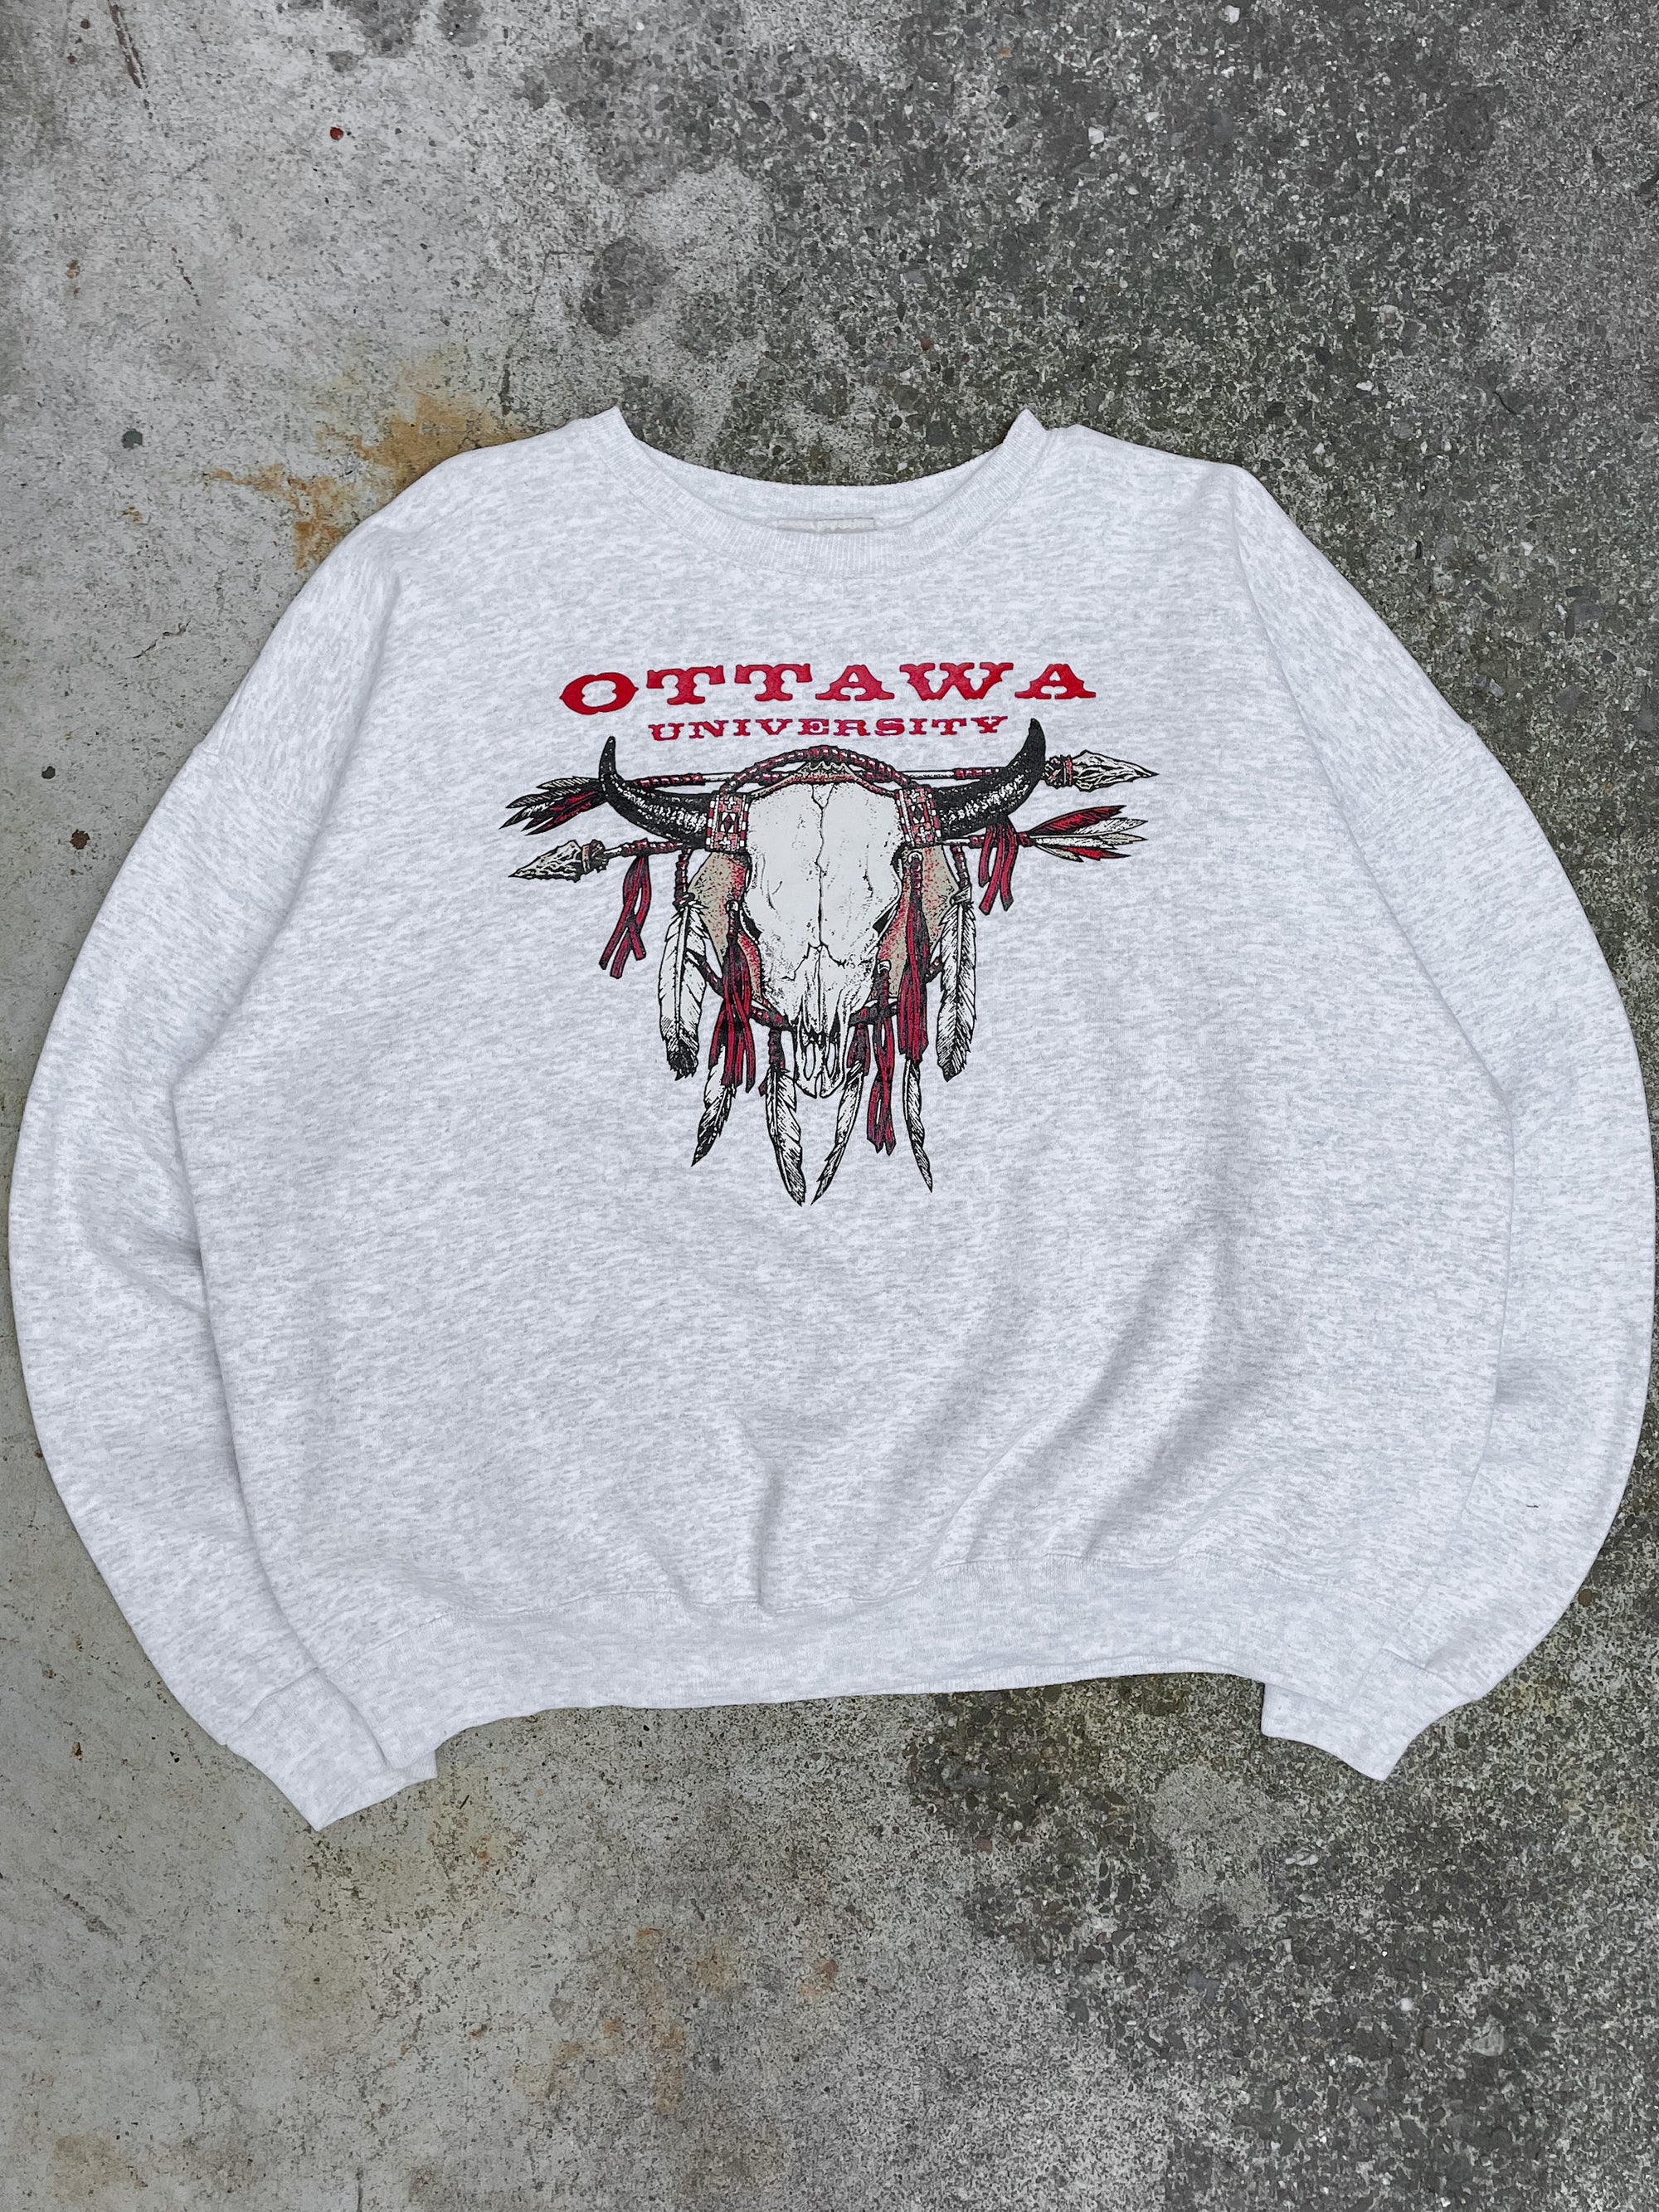 1990s “Ottawa University” Sweatshirt (XL)